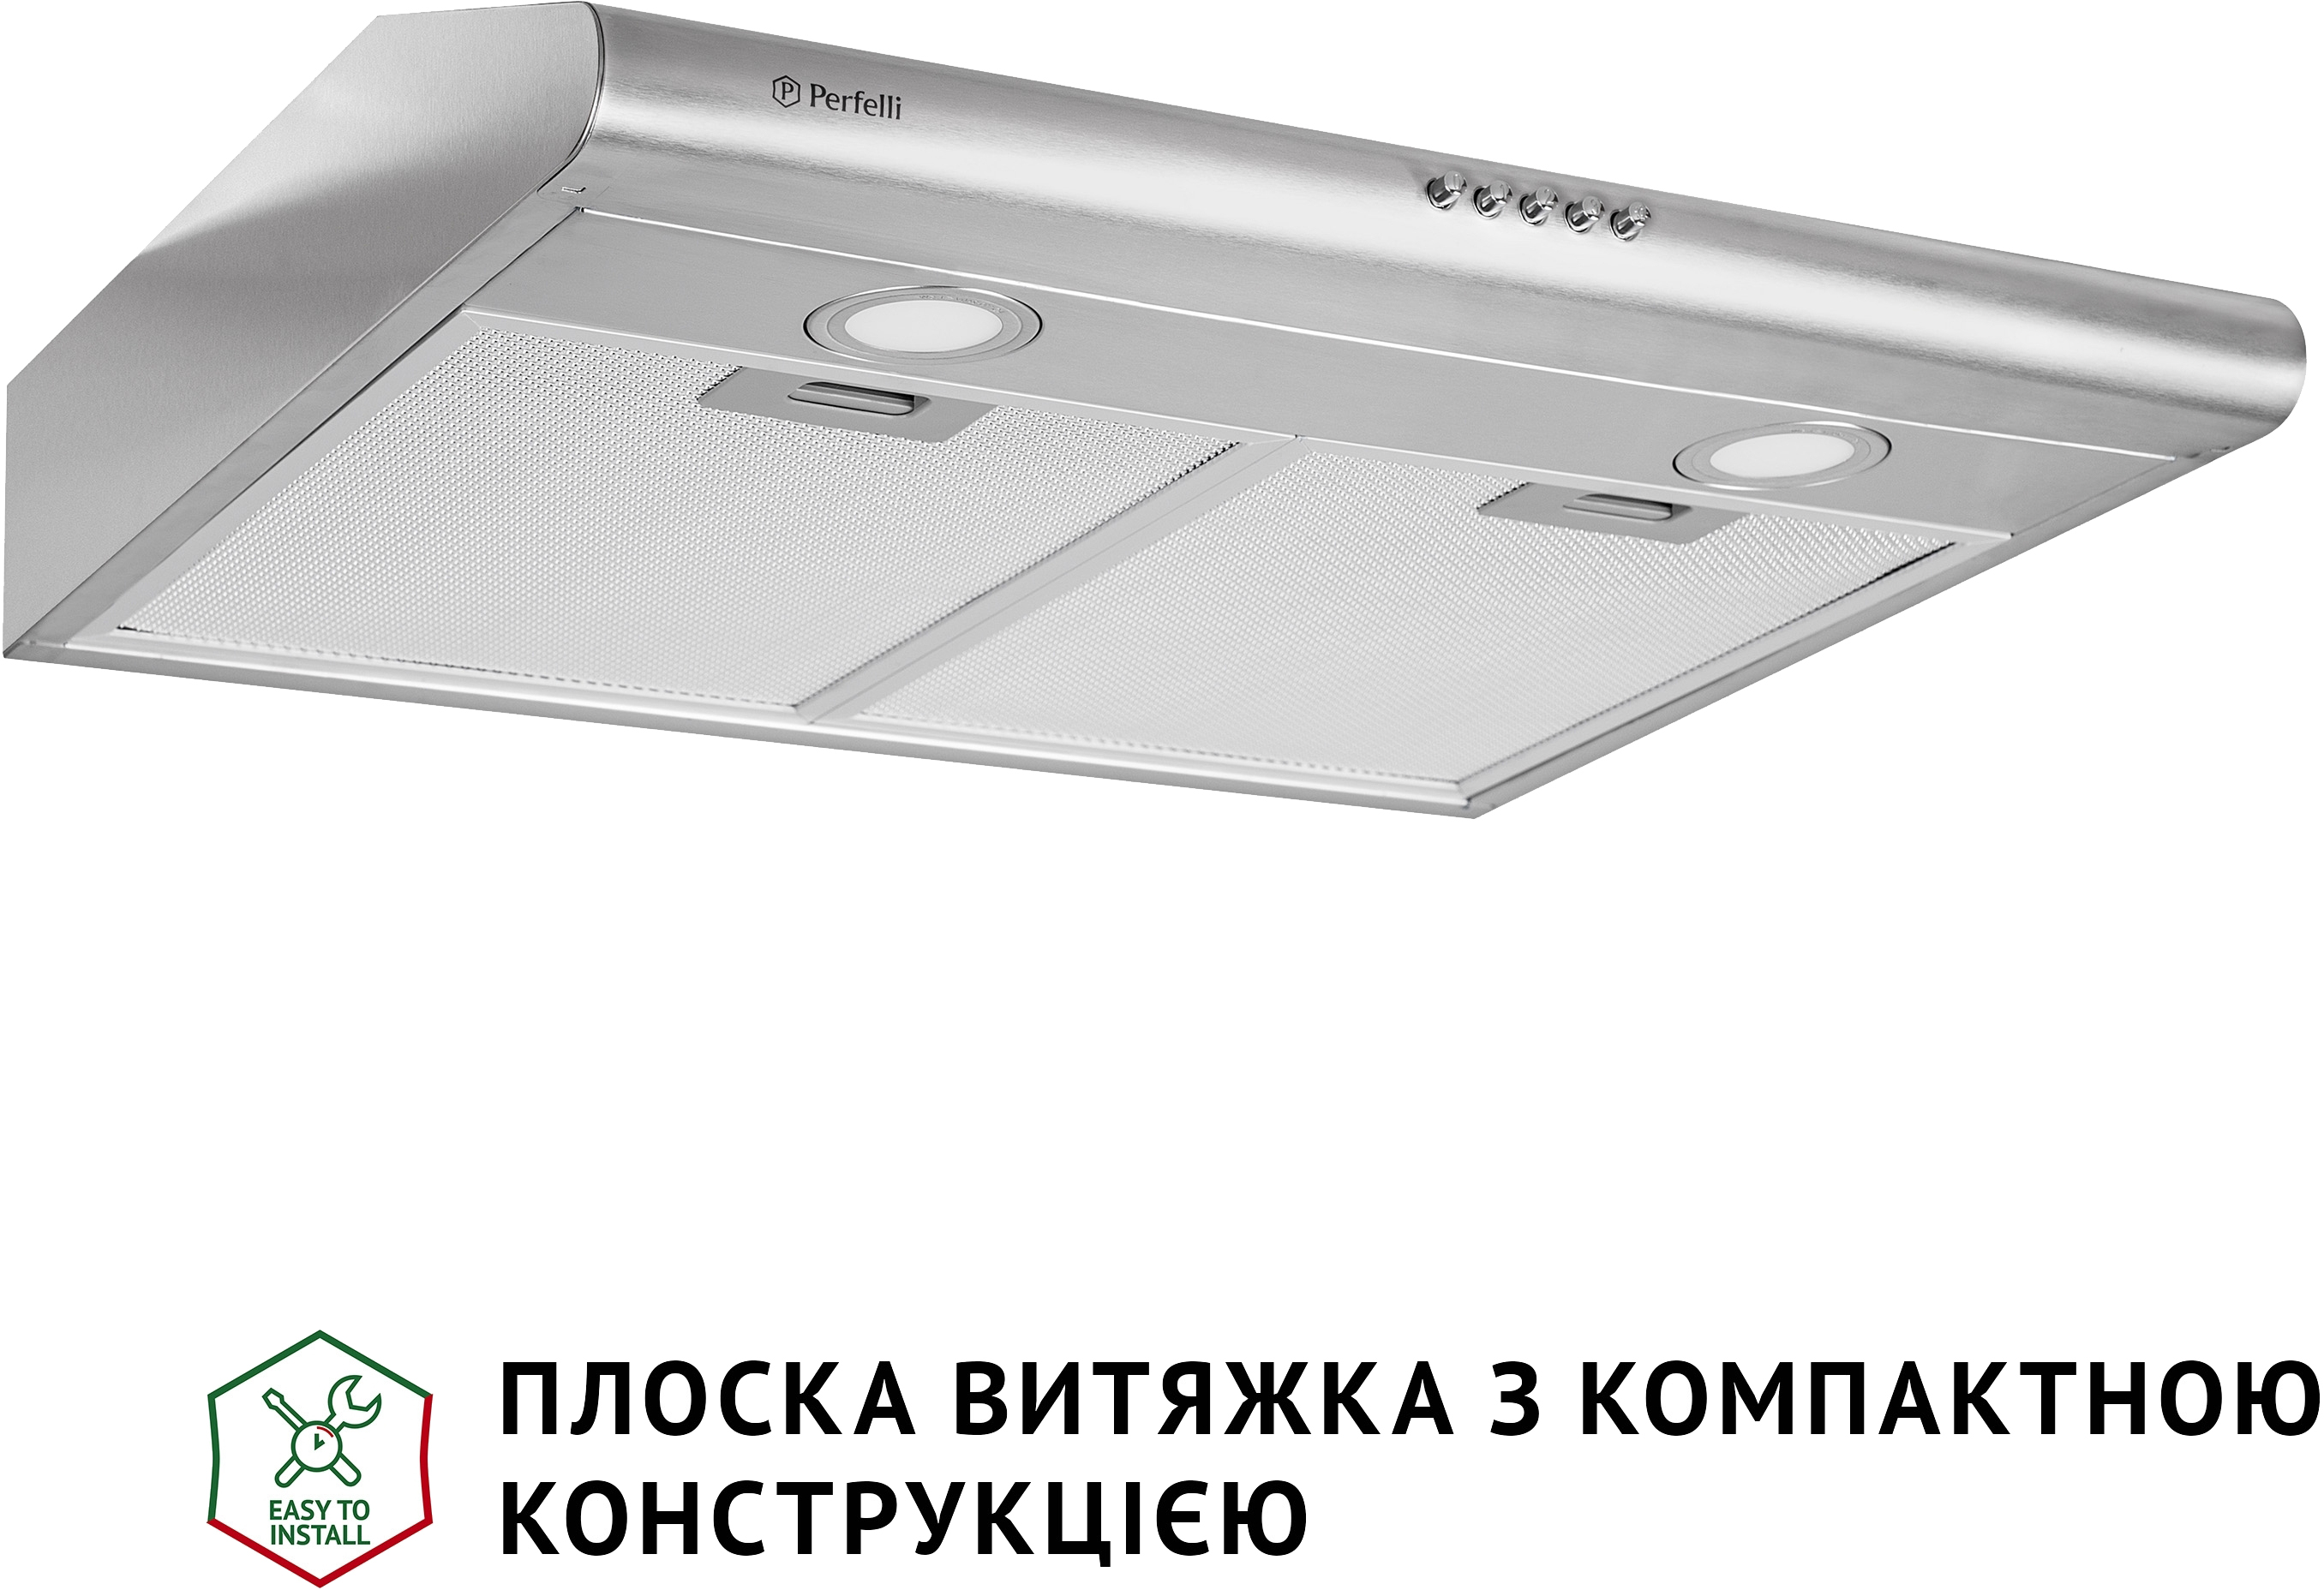 Вытяжка кухонная Perfelli PL 6022 I LED цена 2575.00 грн - фотография 2